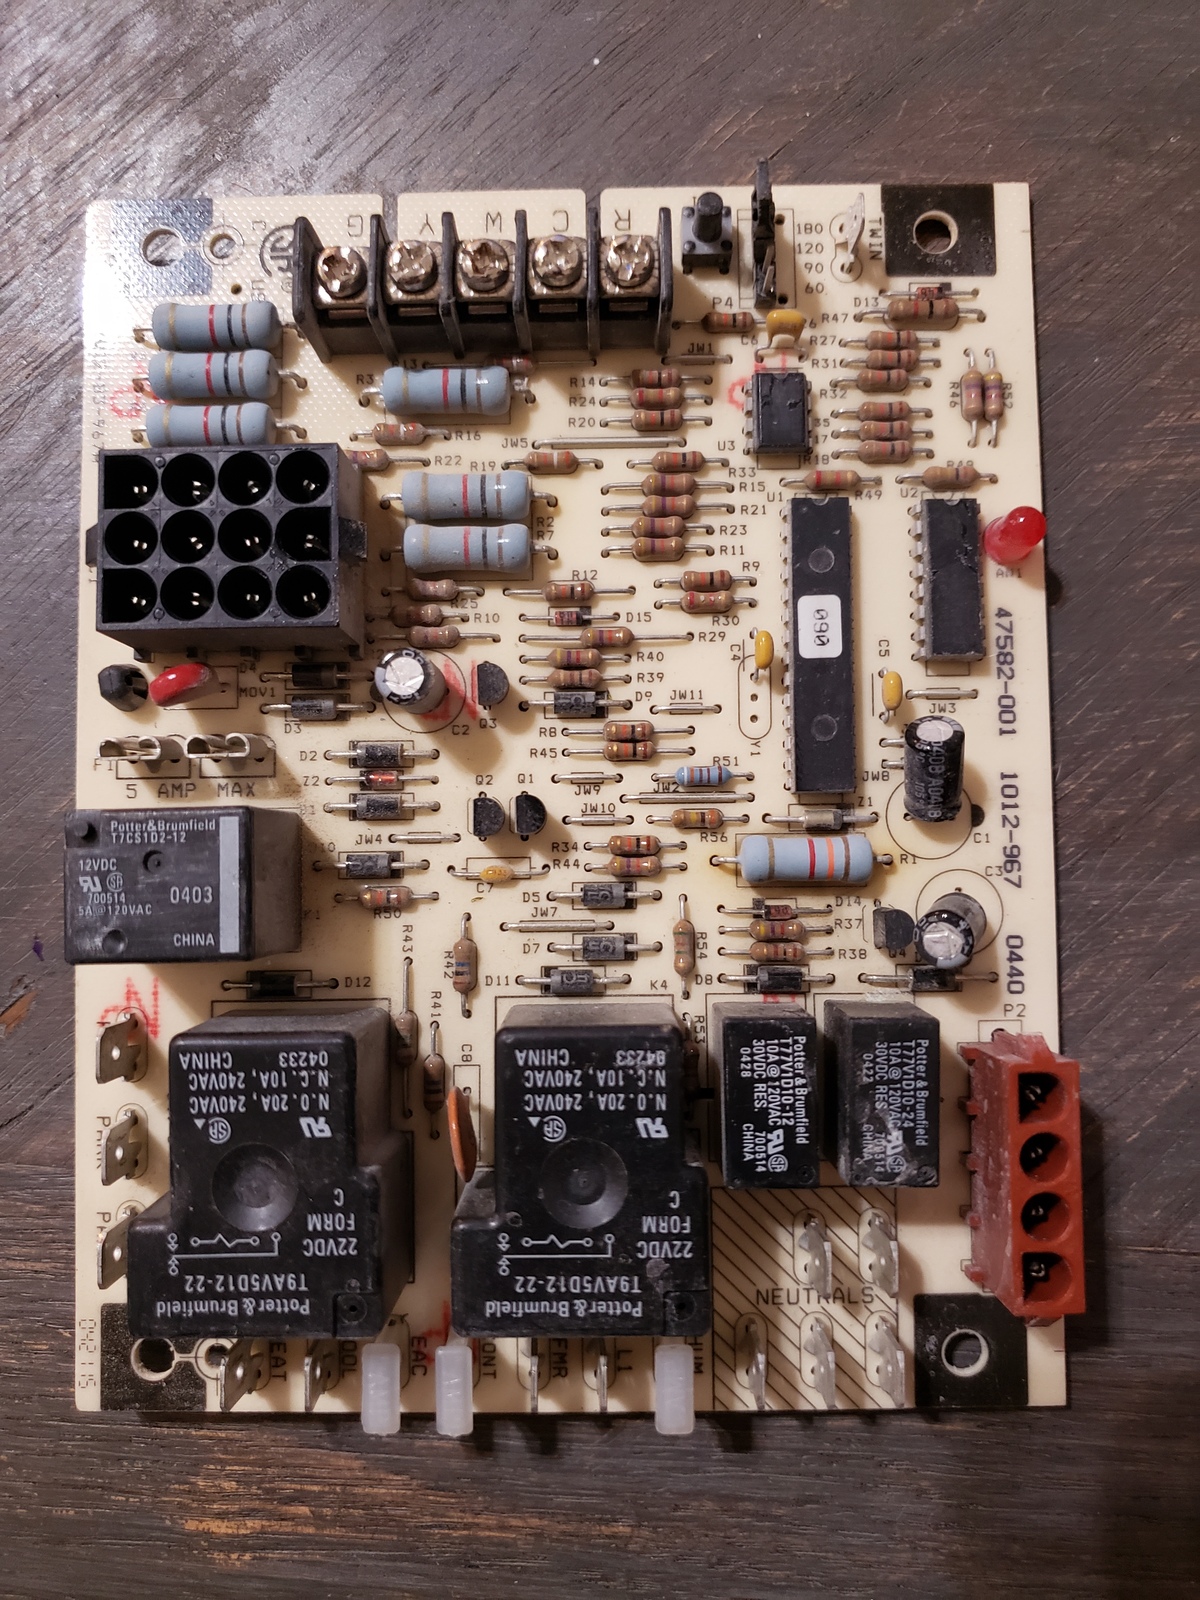 Armstrong lennox oem furnace control circuit board 47582-001 - $50.00